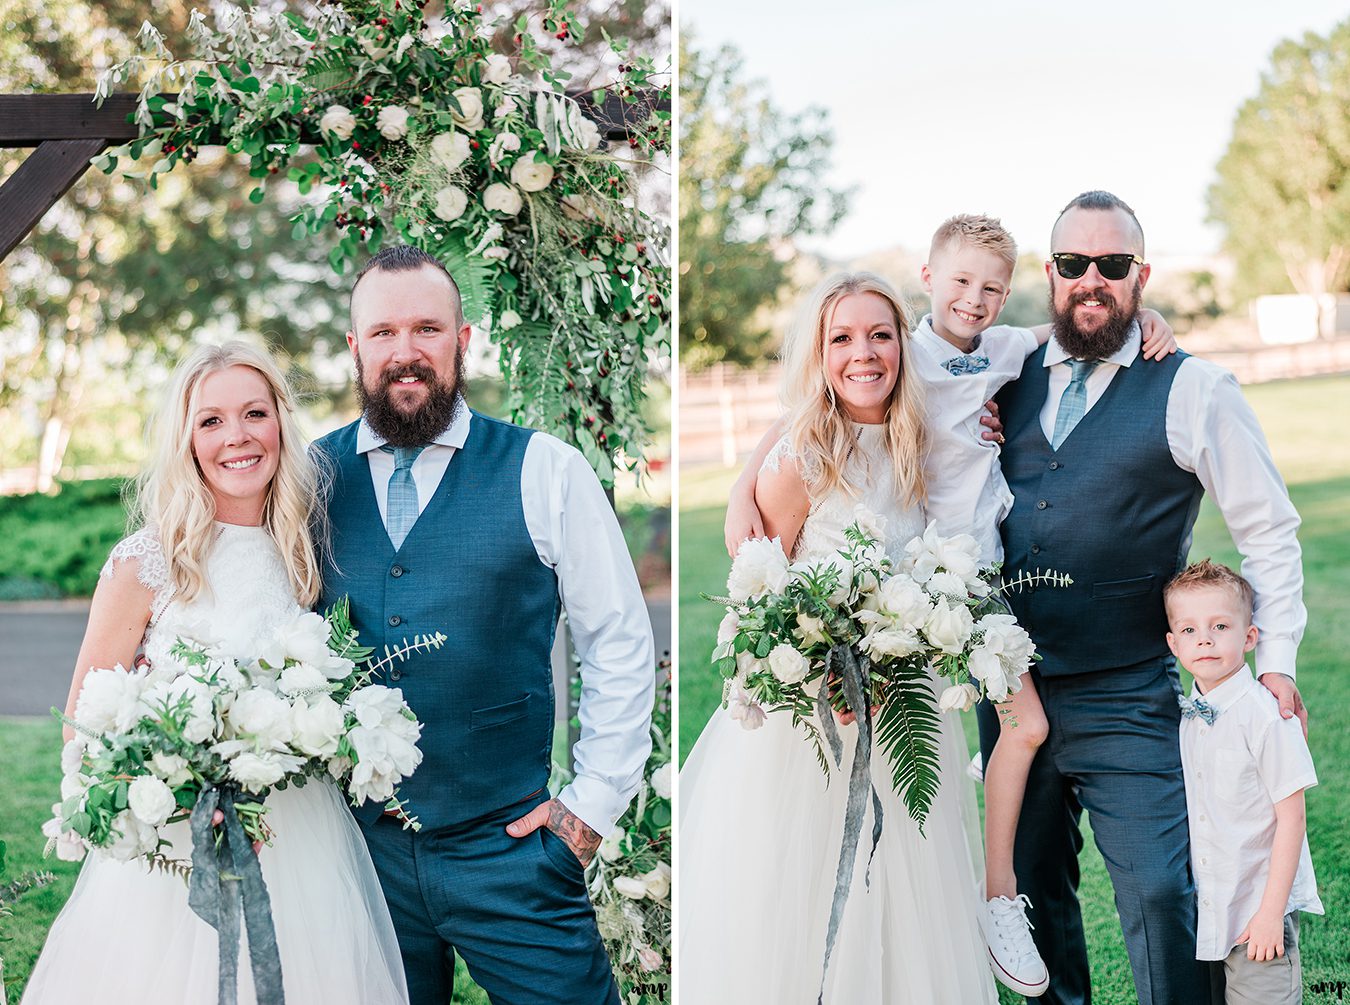 Beth and Dustin with their nephews | Grand Junction Backyard Wedding | amanda.matilda.photography